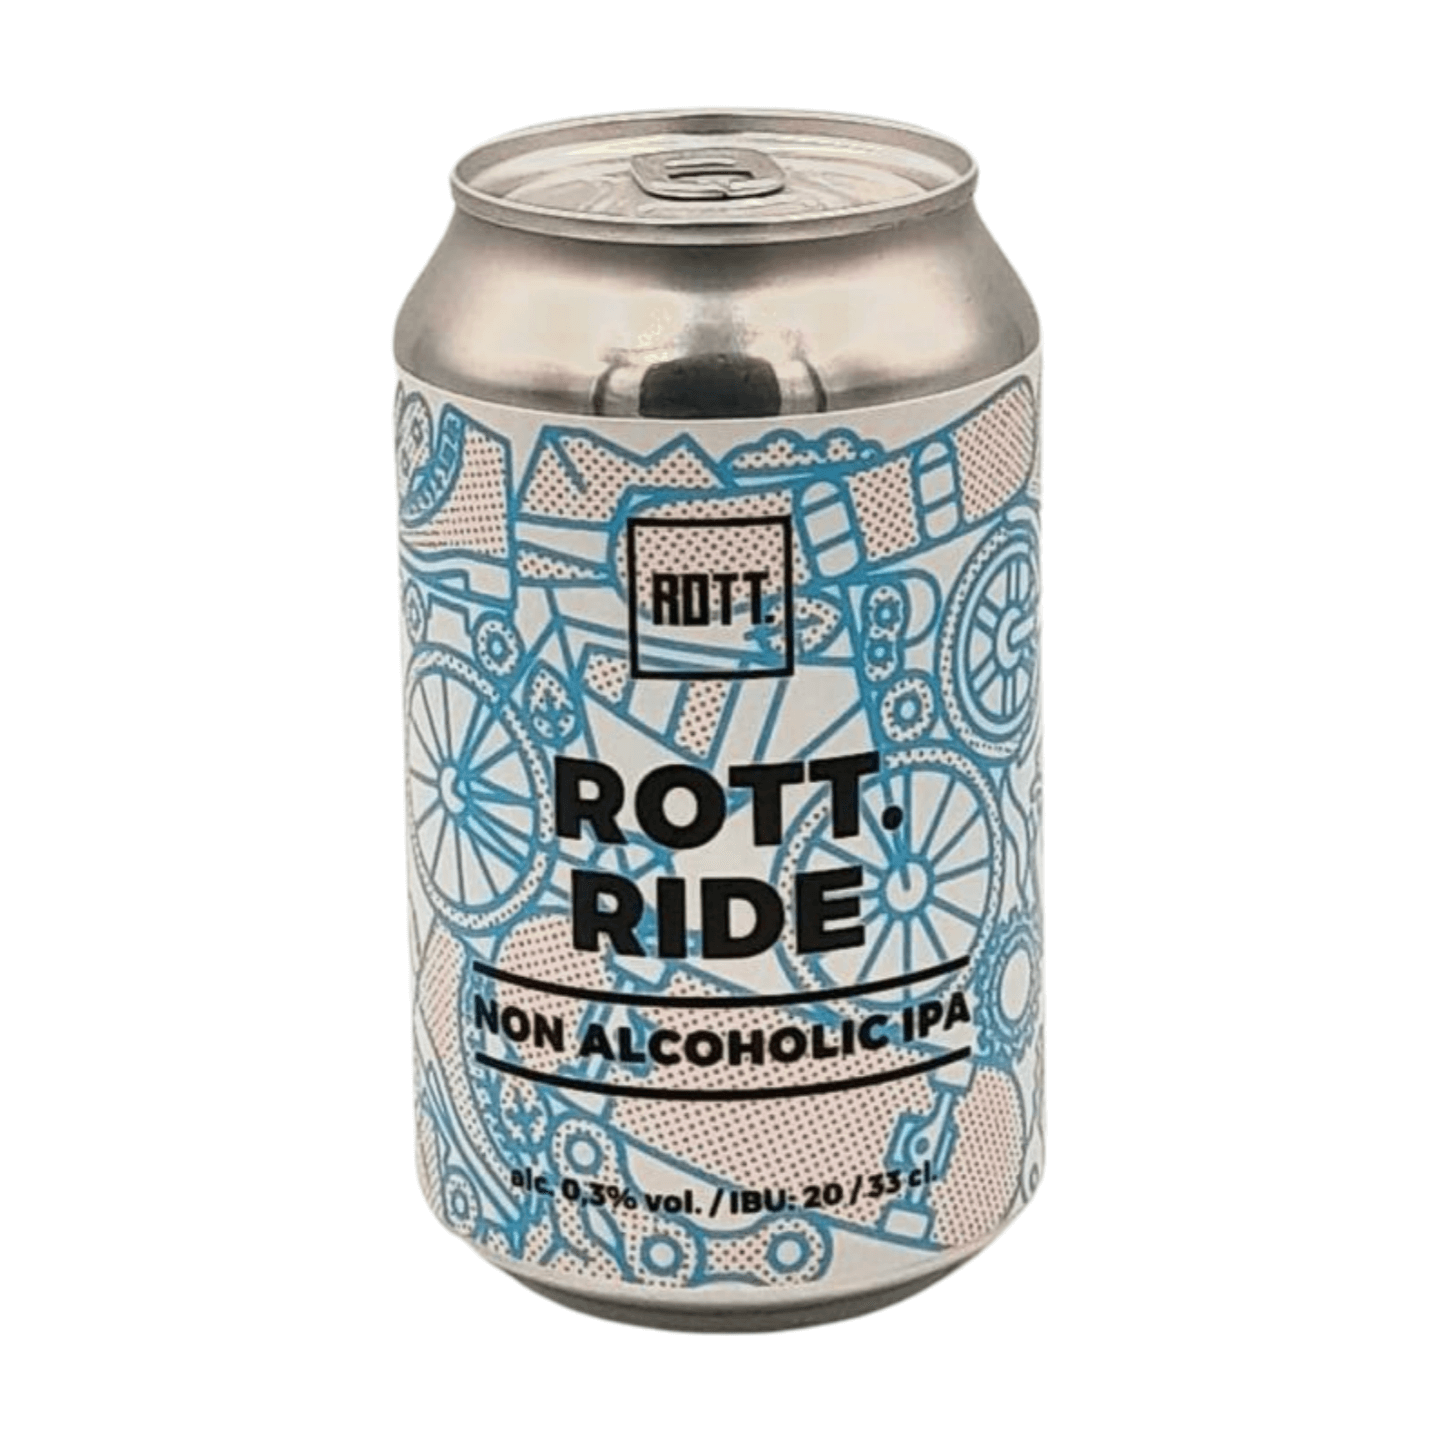 ROTT. Brouwers Ride | Non Alcoholic IPA Webshop Online Verdins Bierwinkel Rotterdam